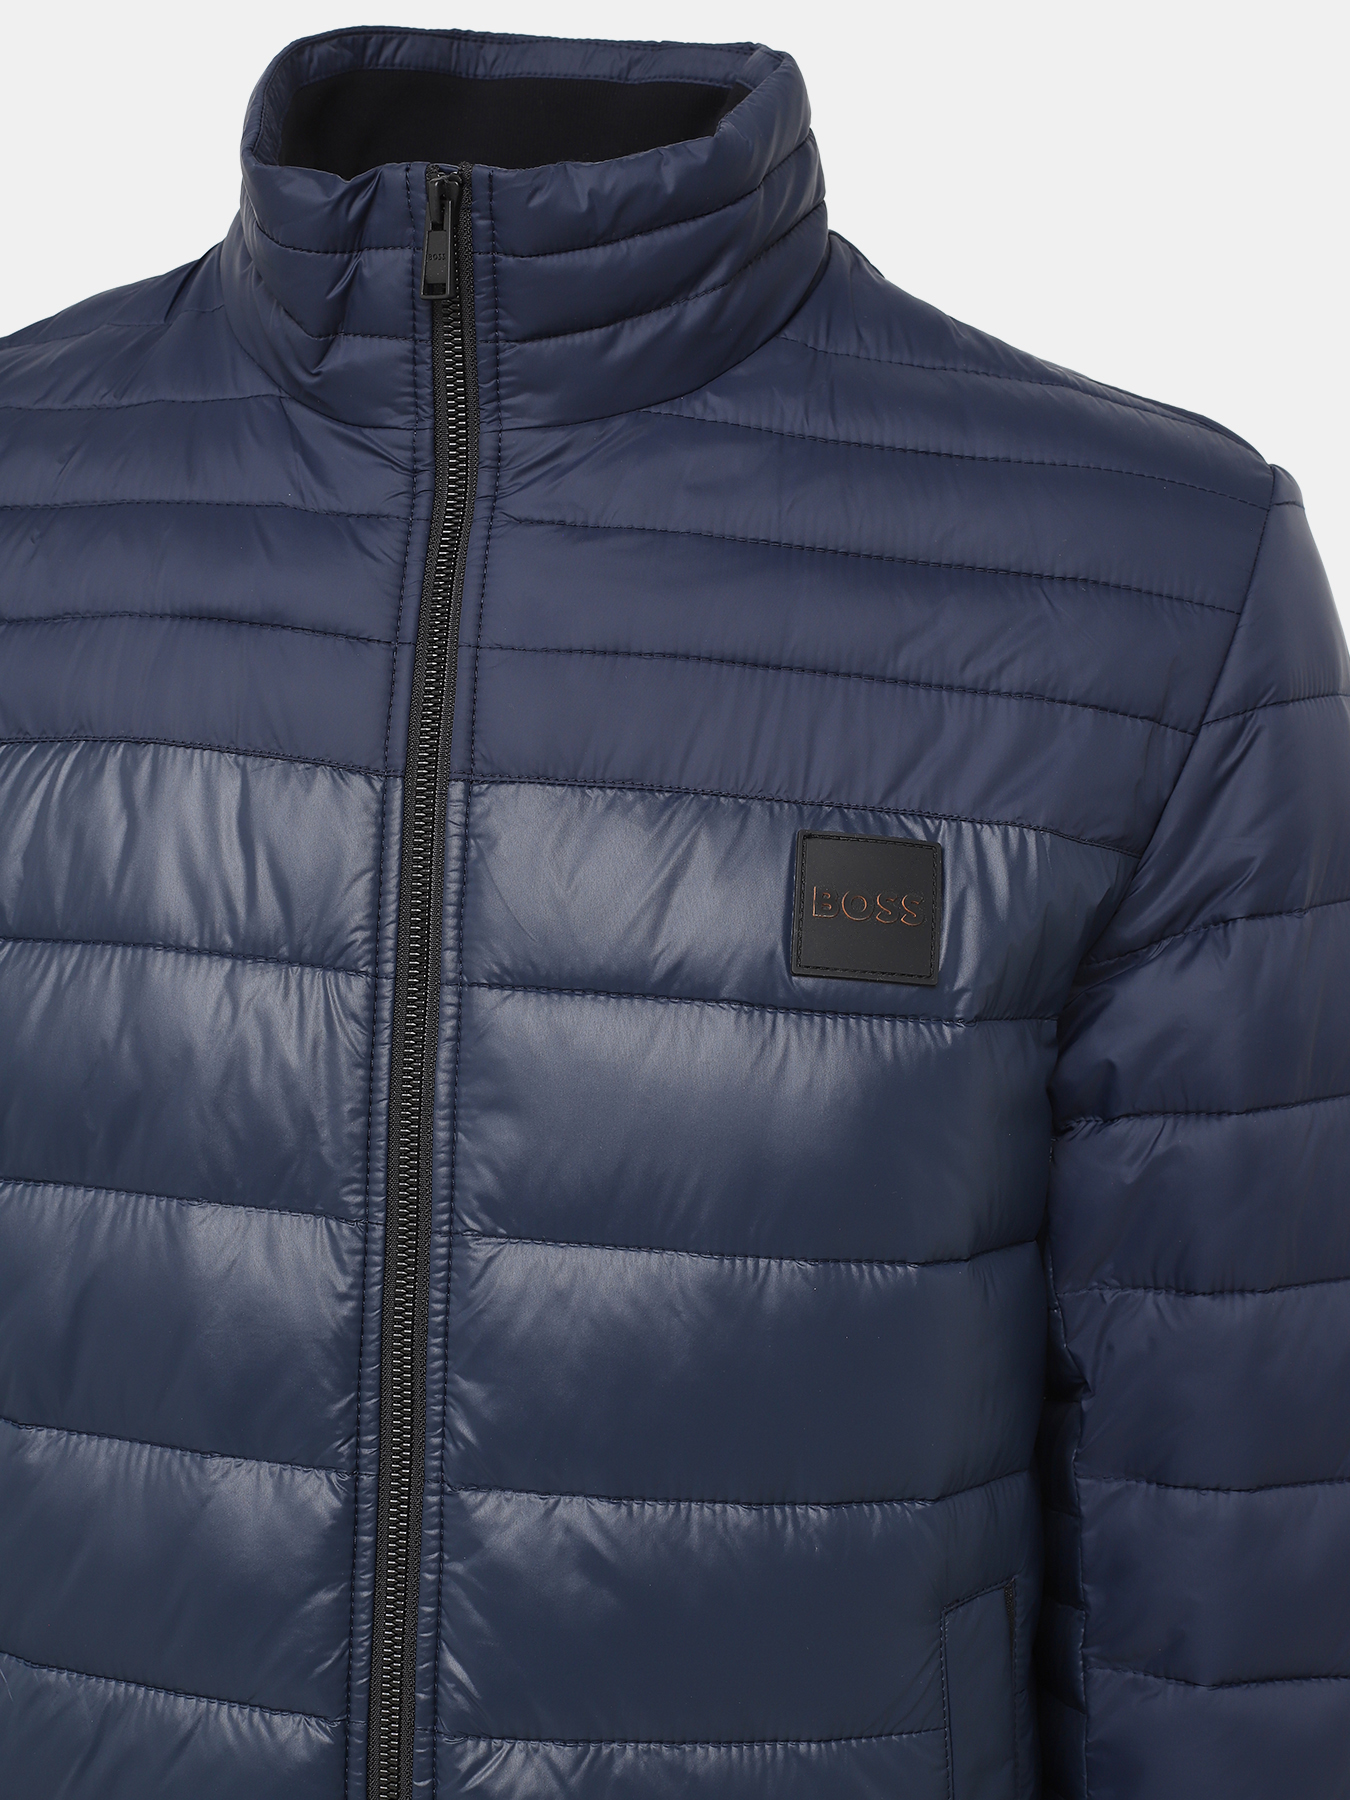 Куртка Oden BOSS 420447-025, цвет синий, размер 48 - фото 3